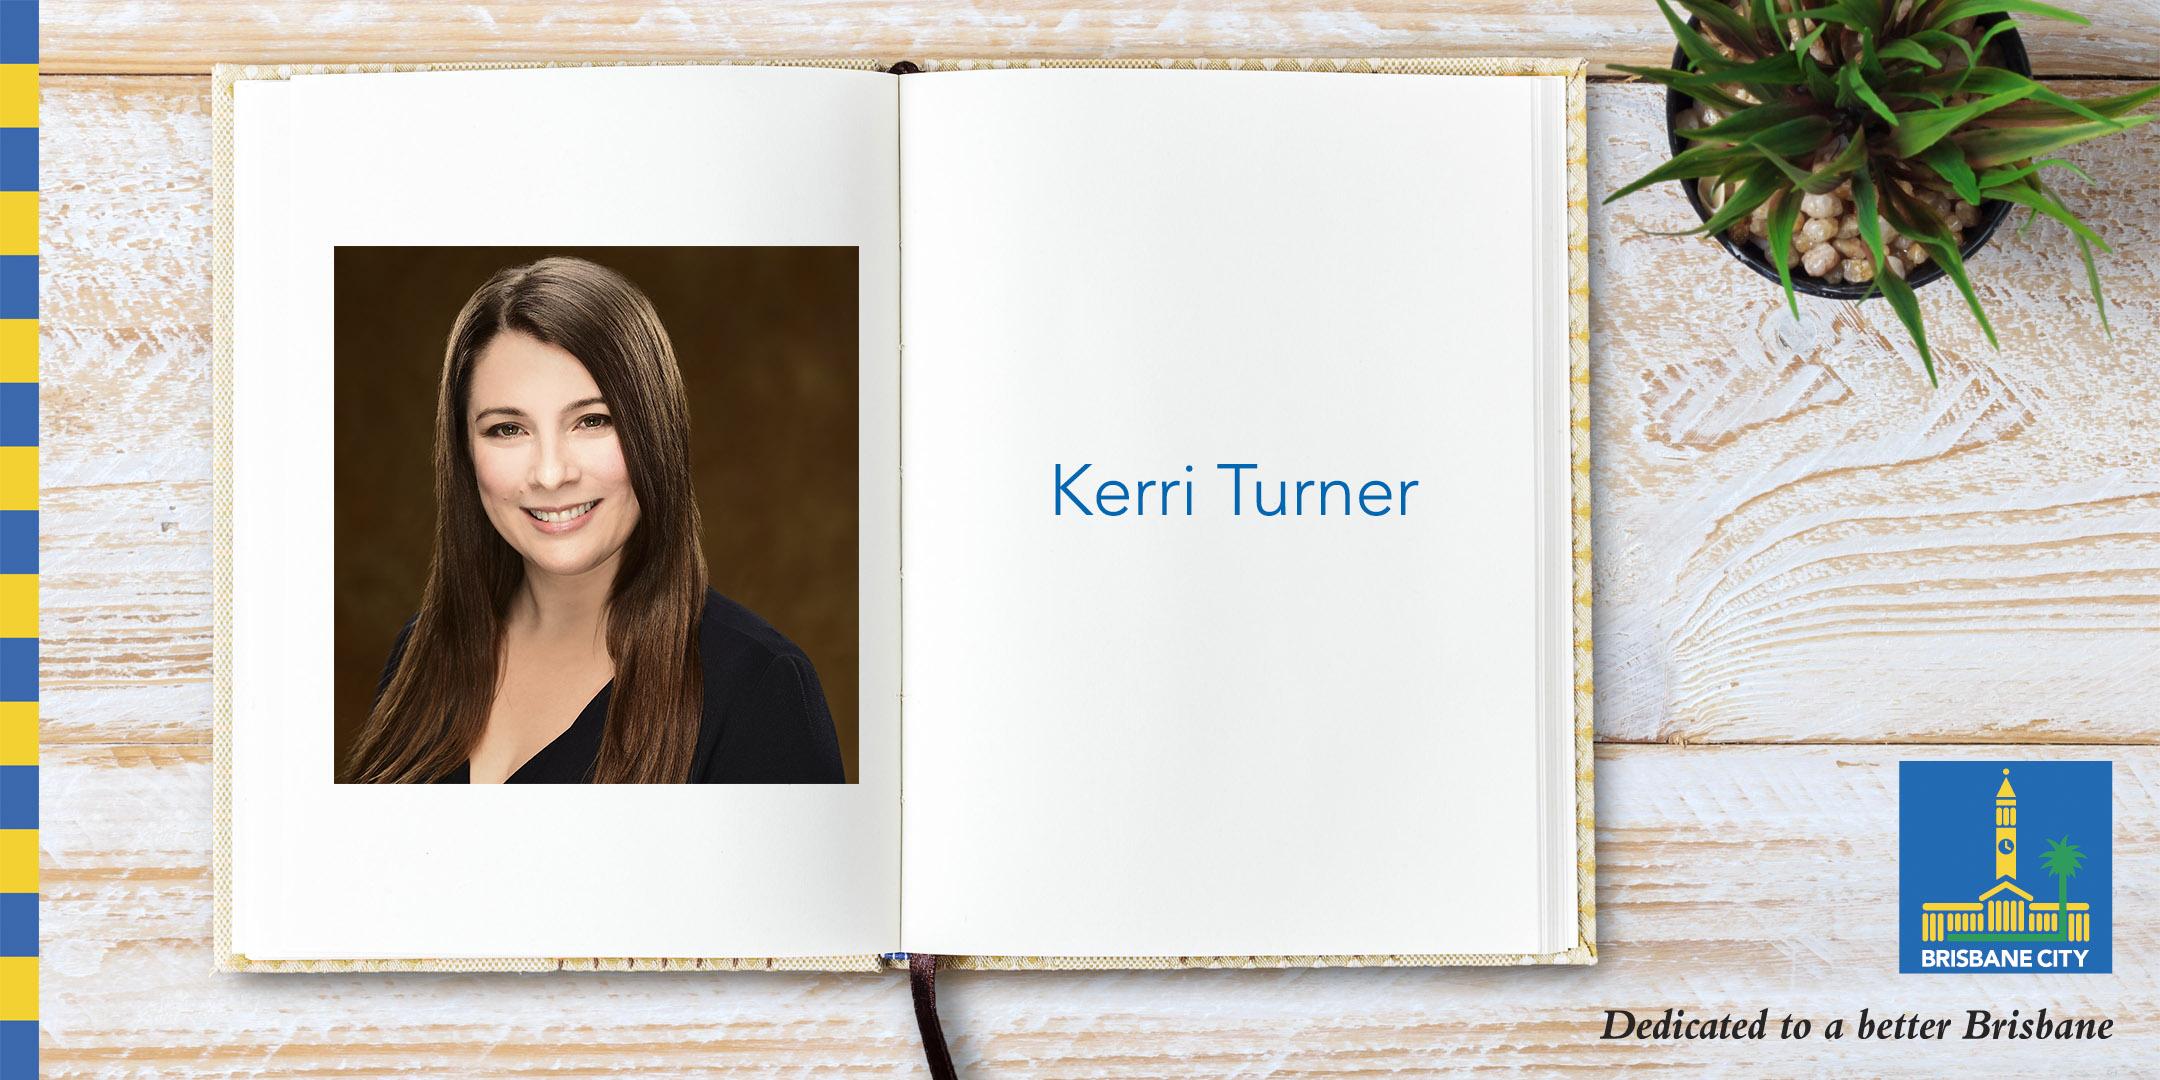 Meet Kerri Turner - Brisbane Square Library